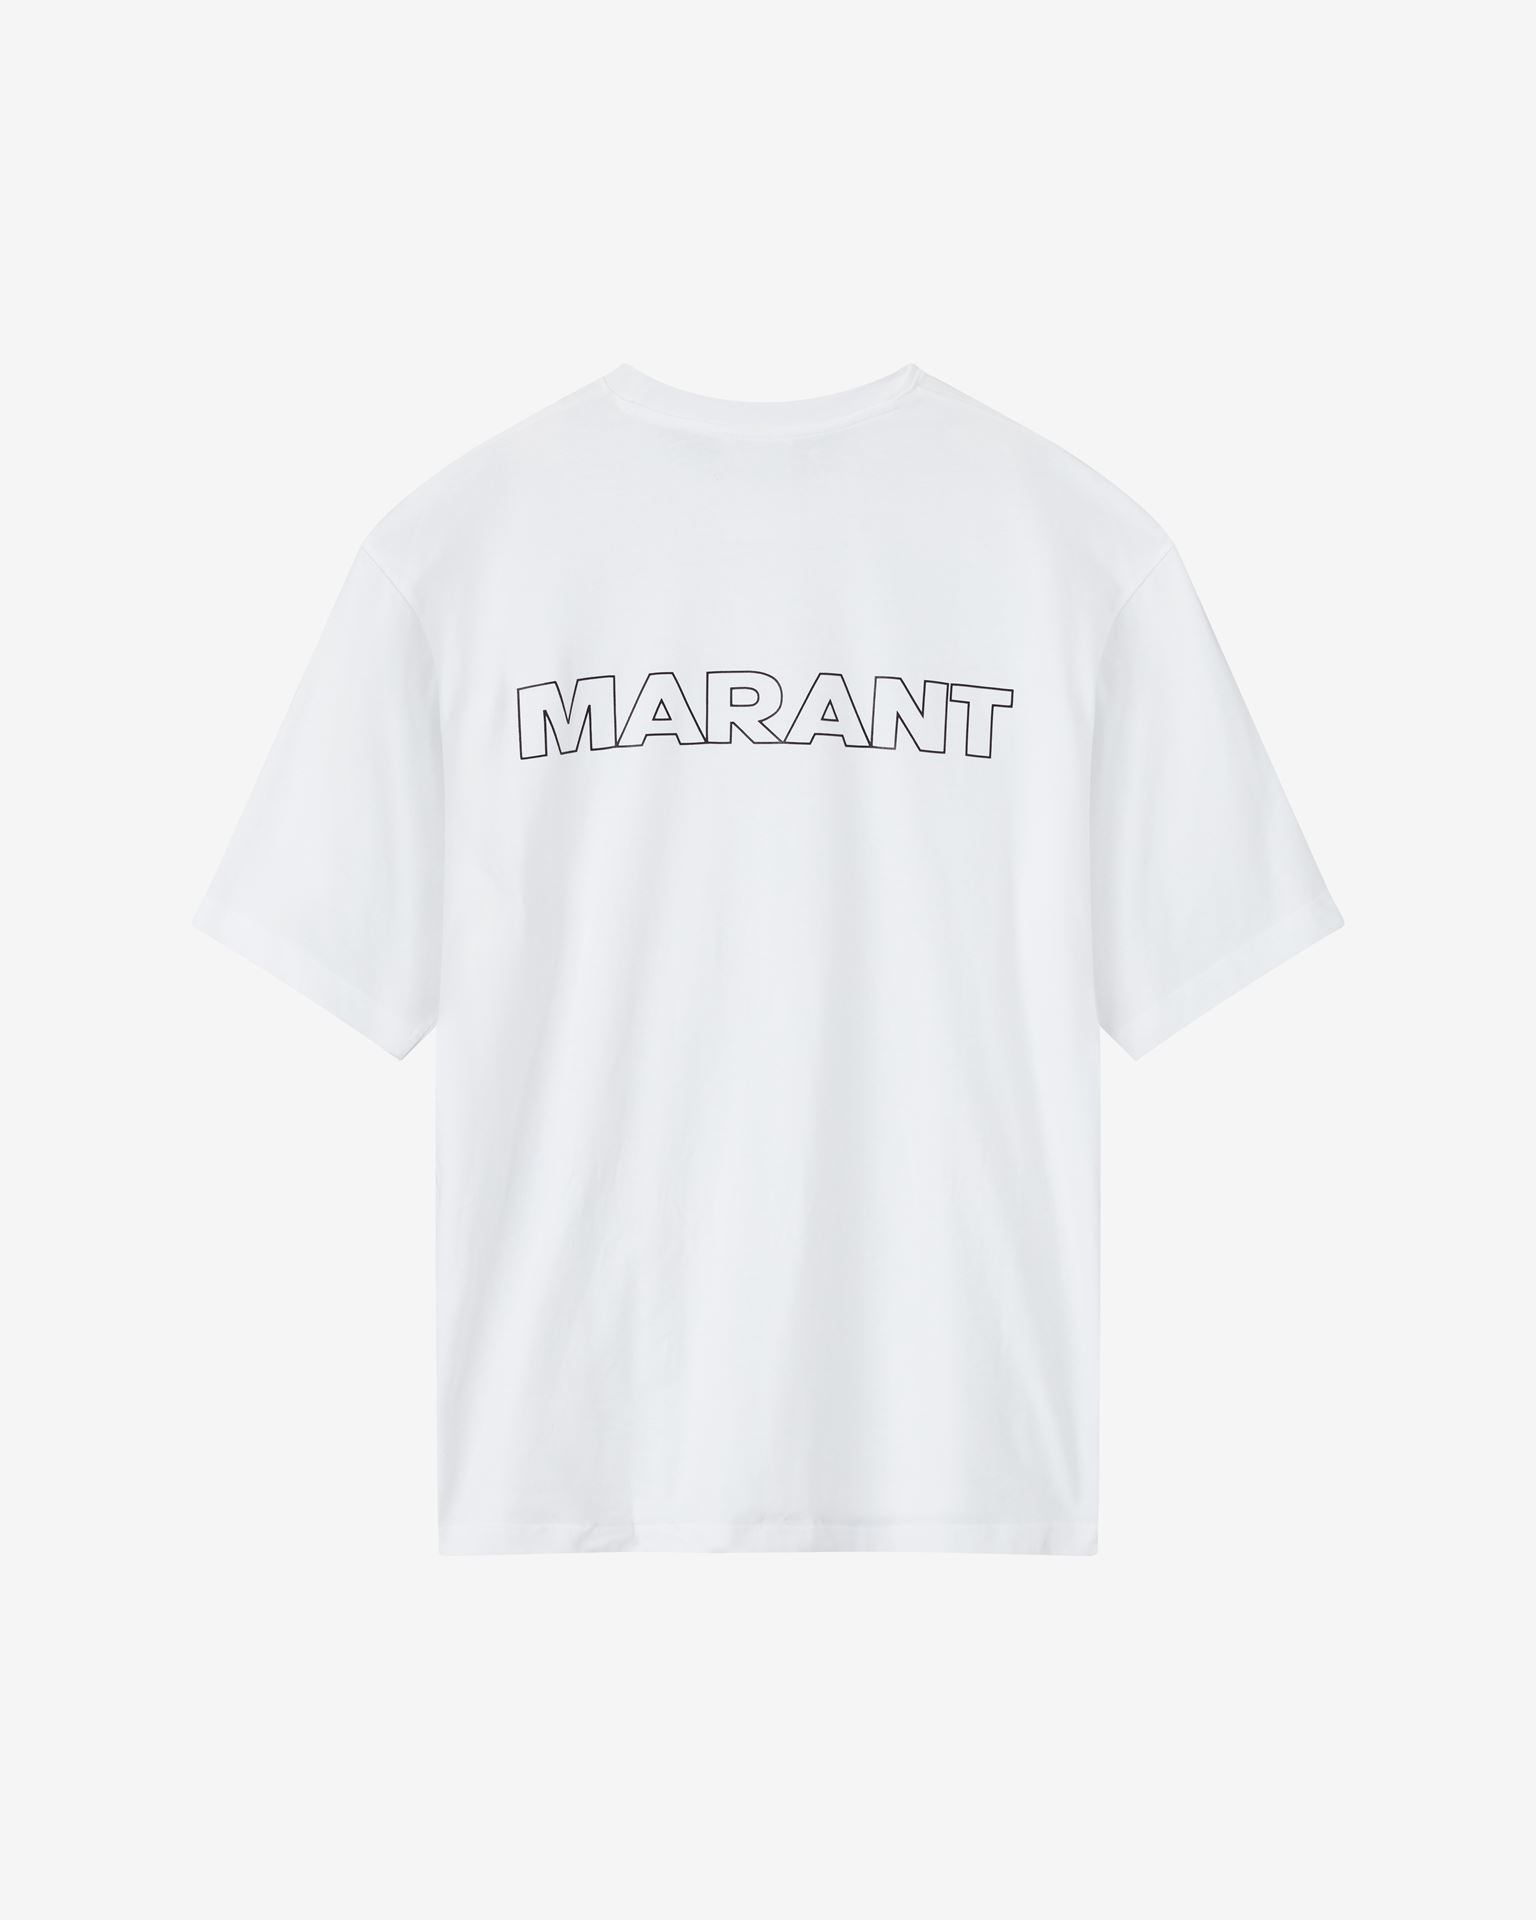 Isabel Marant, Tee-shirt En Coton marant Guizy - Homme - Noir